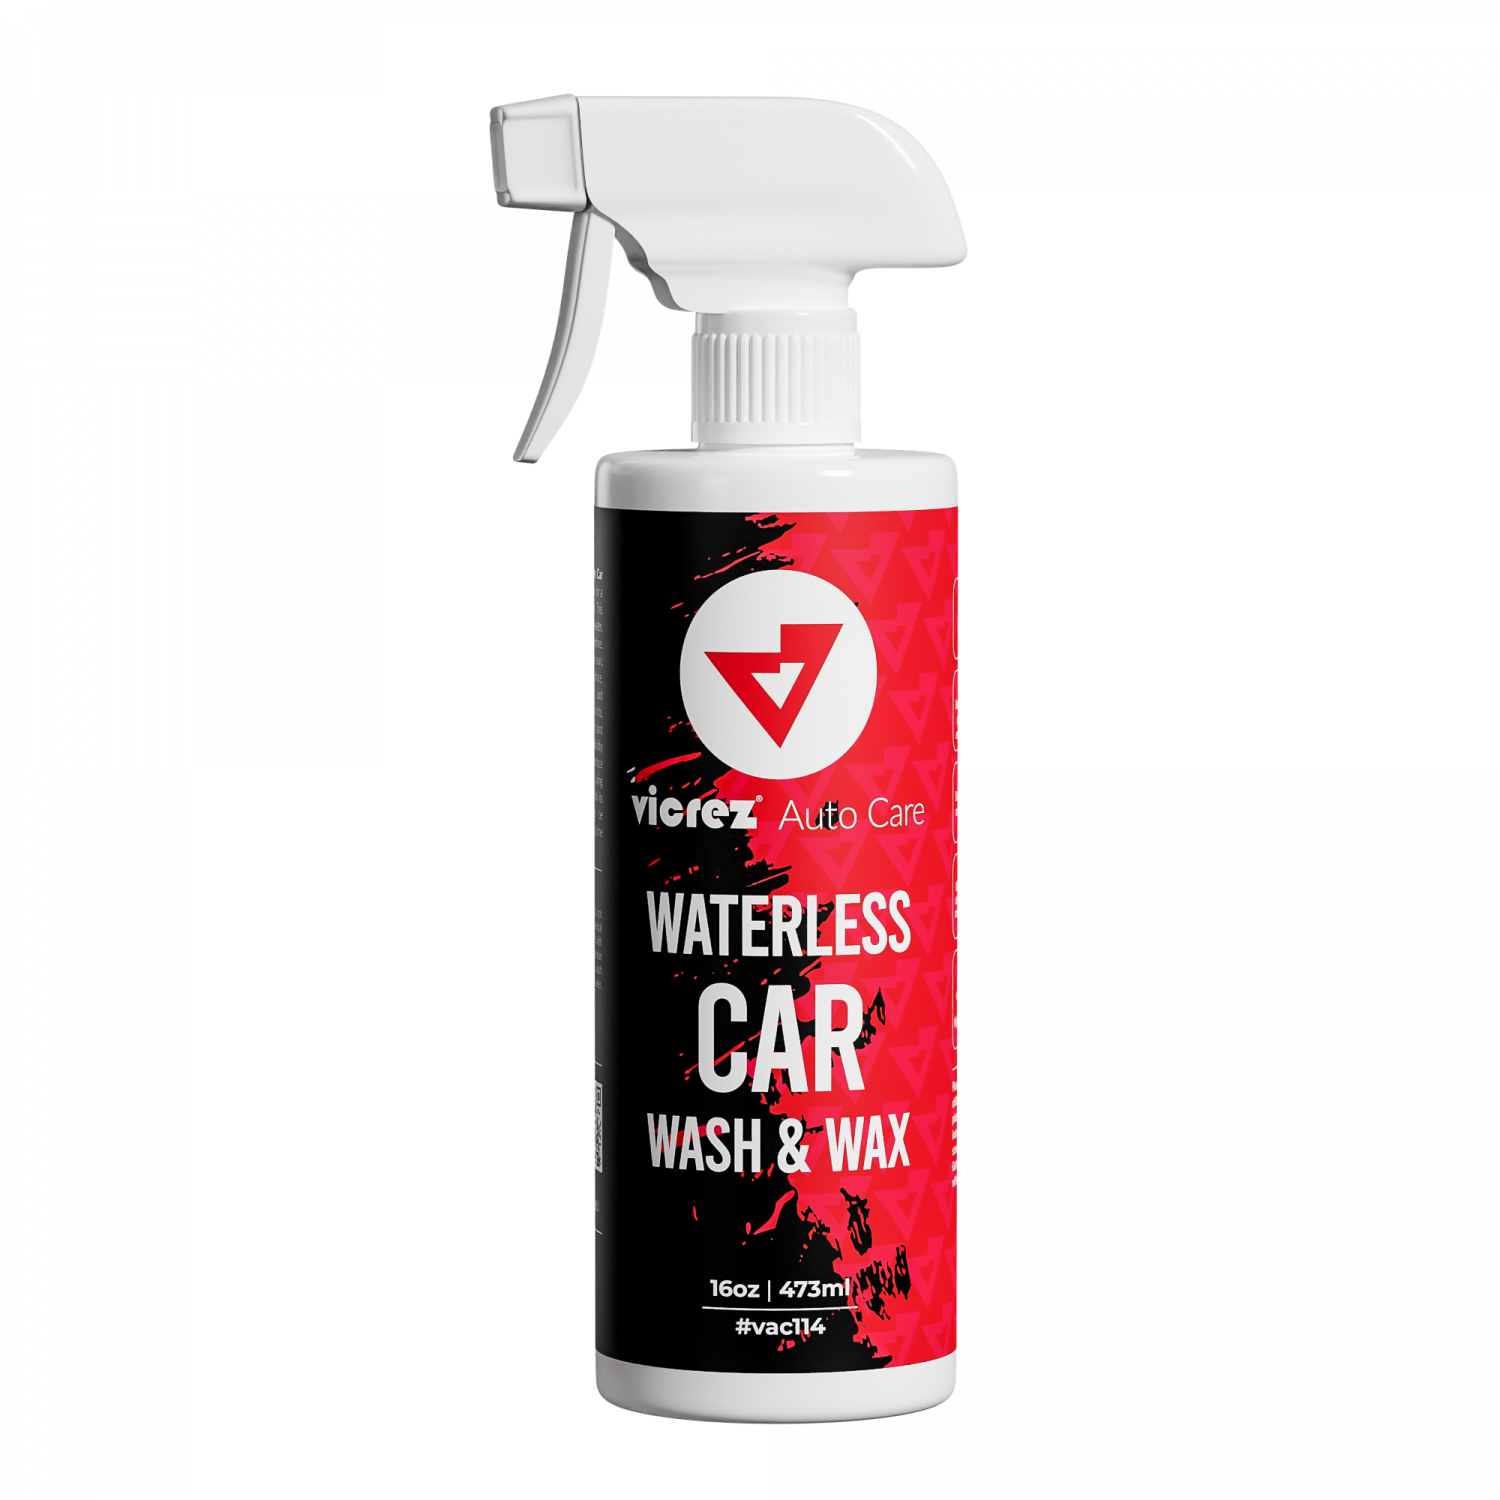 Vicrez Auto Care vac111 Complete Cleaning Car Wash Detailing Solution  13-Piece Kit